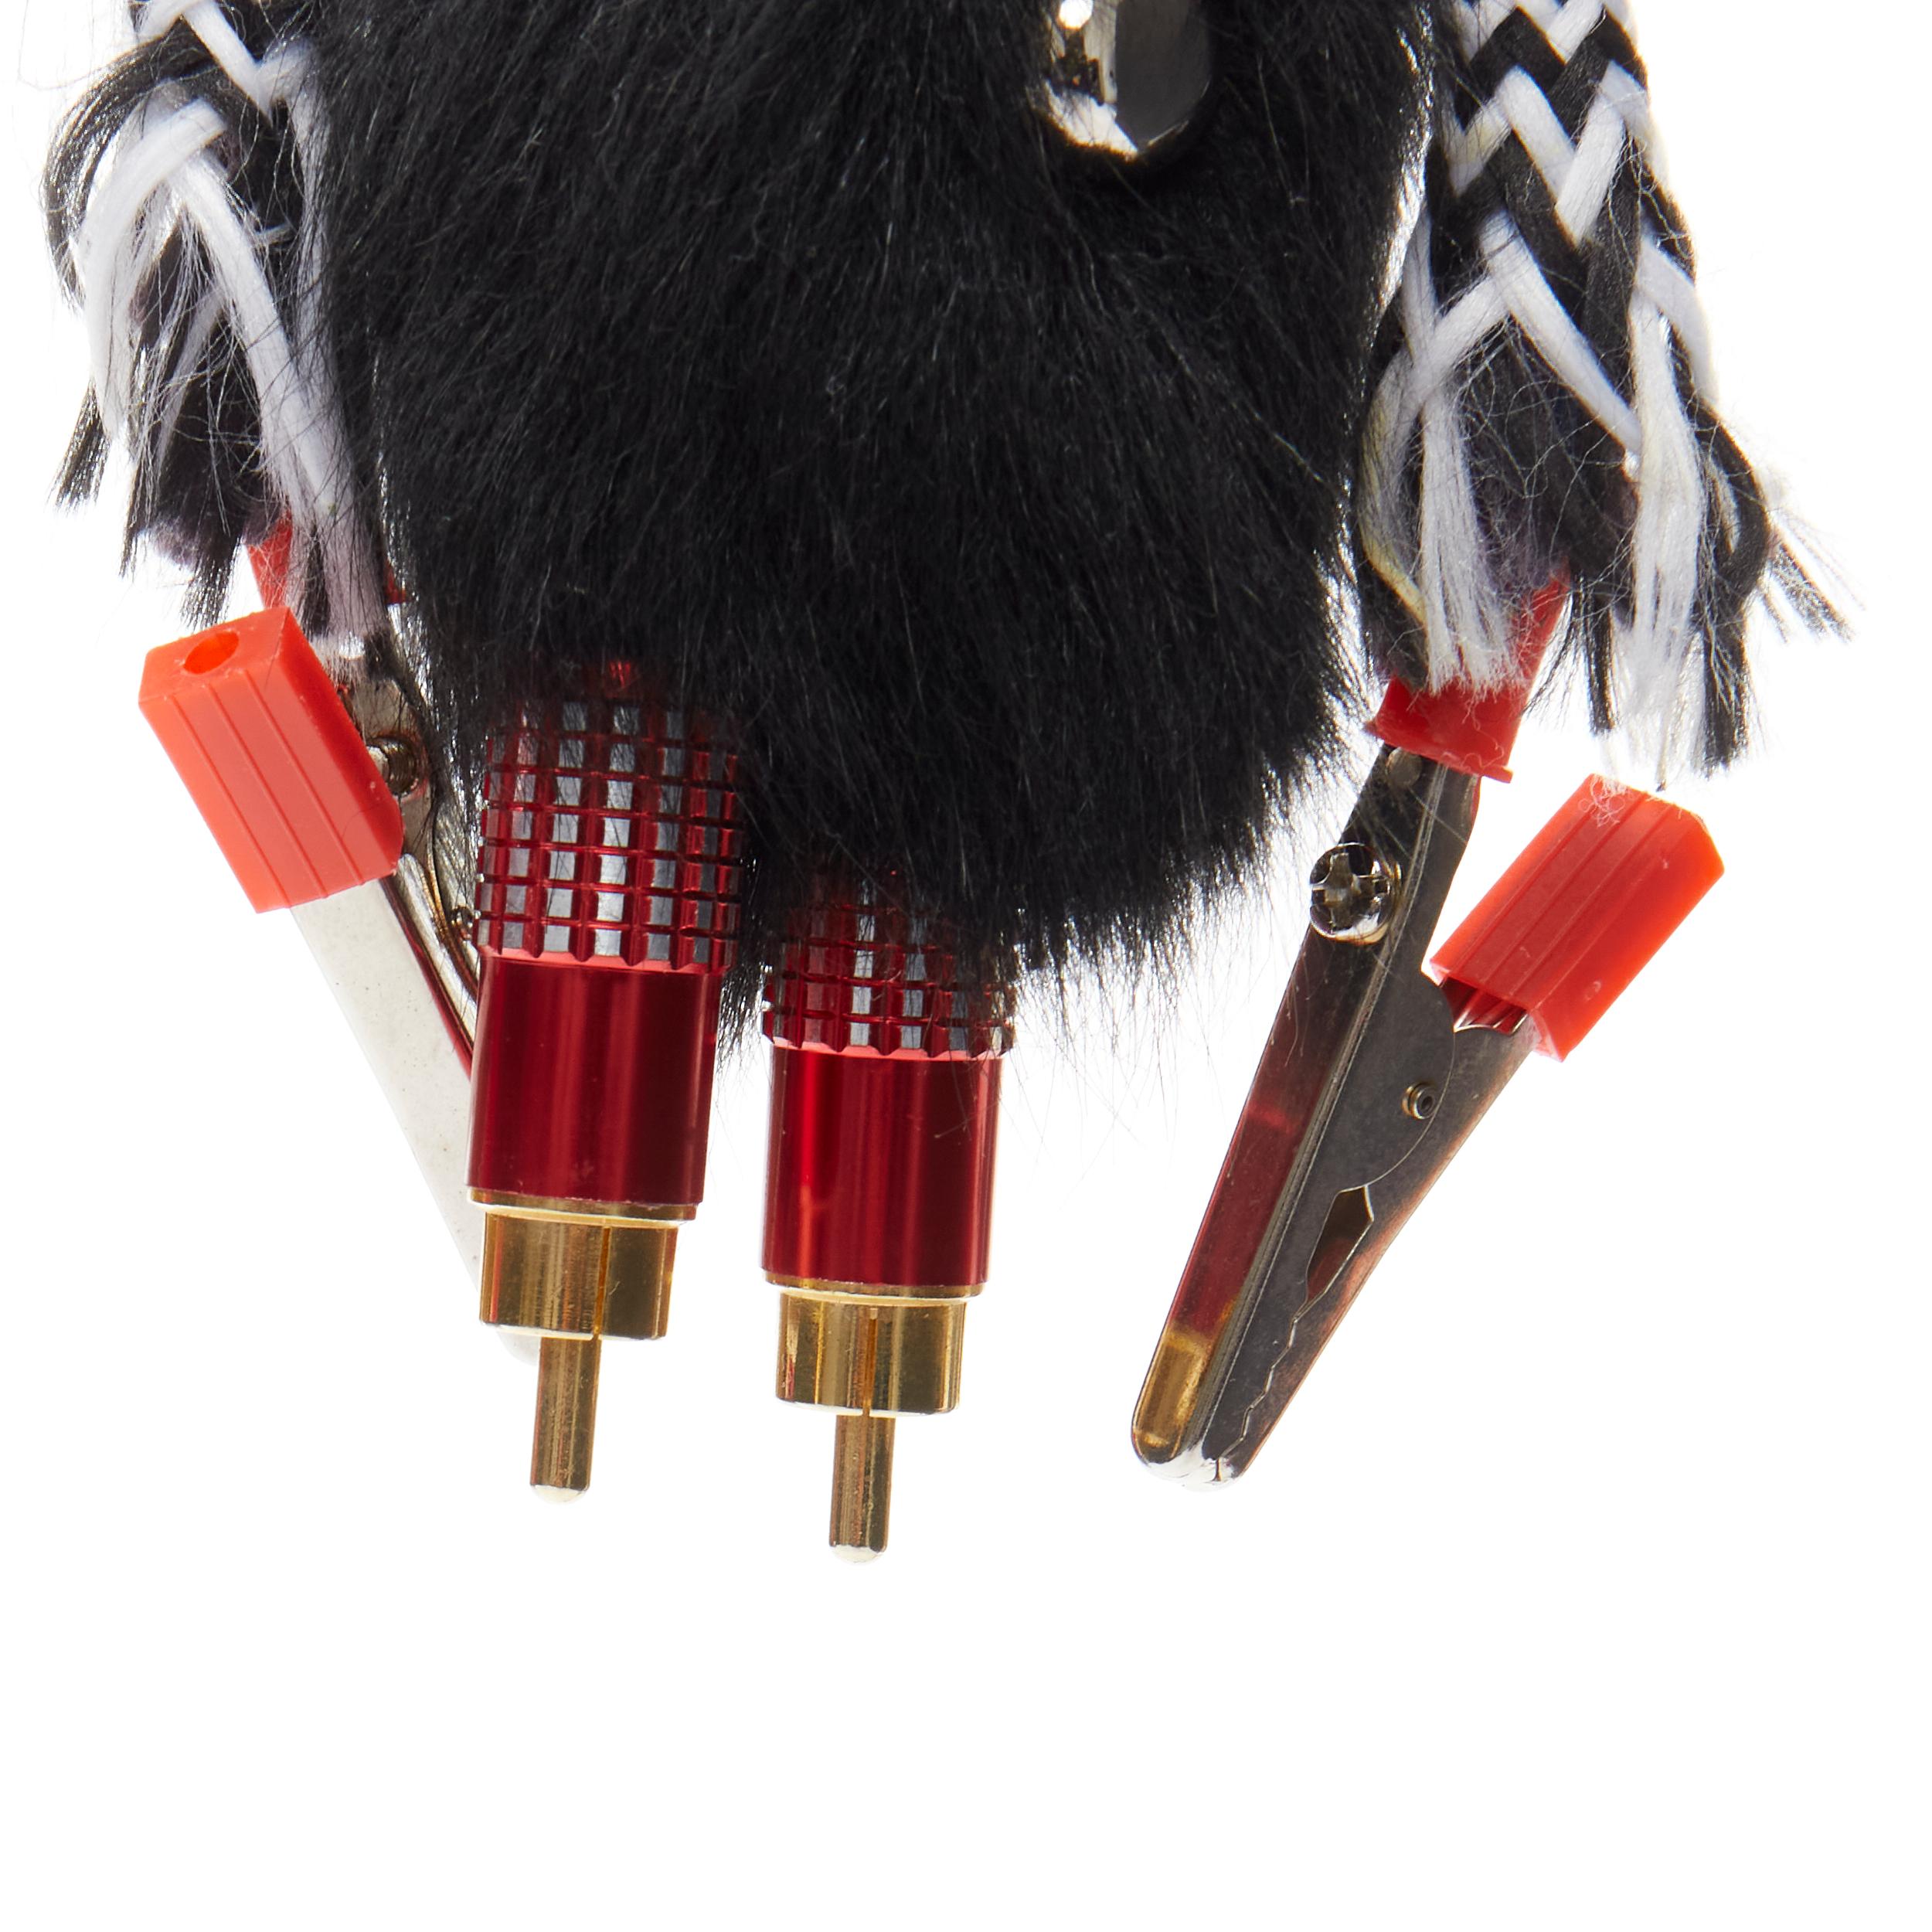 PRADA black sheep fur bolt hardware hand monster robot charm key ring
Reference: TGAS/C01538
Brand: Prada
Designer: Miuccia Prada
Material: Fur, Metal
Color: Black, Multicolour
Pattern: Solid
Closure: Clasp

CONDITION:
Condition: Excellent, this